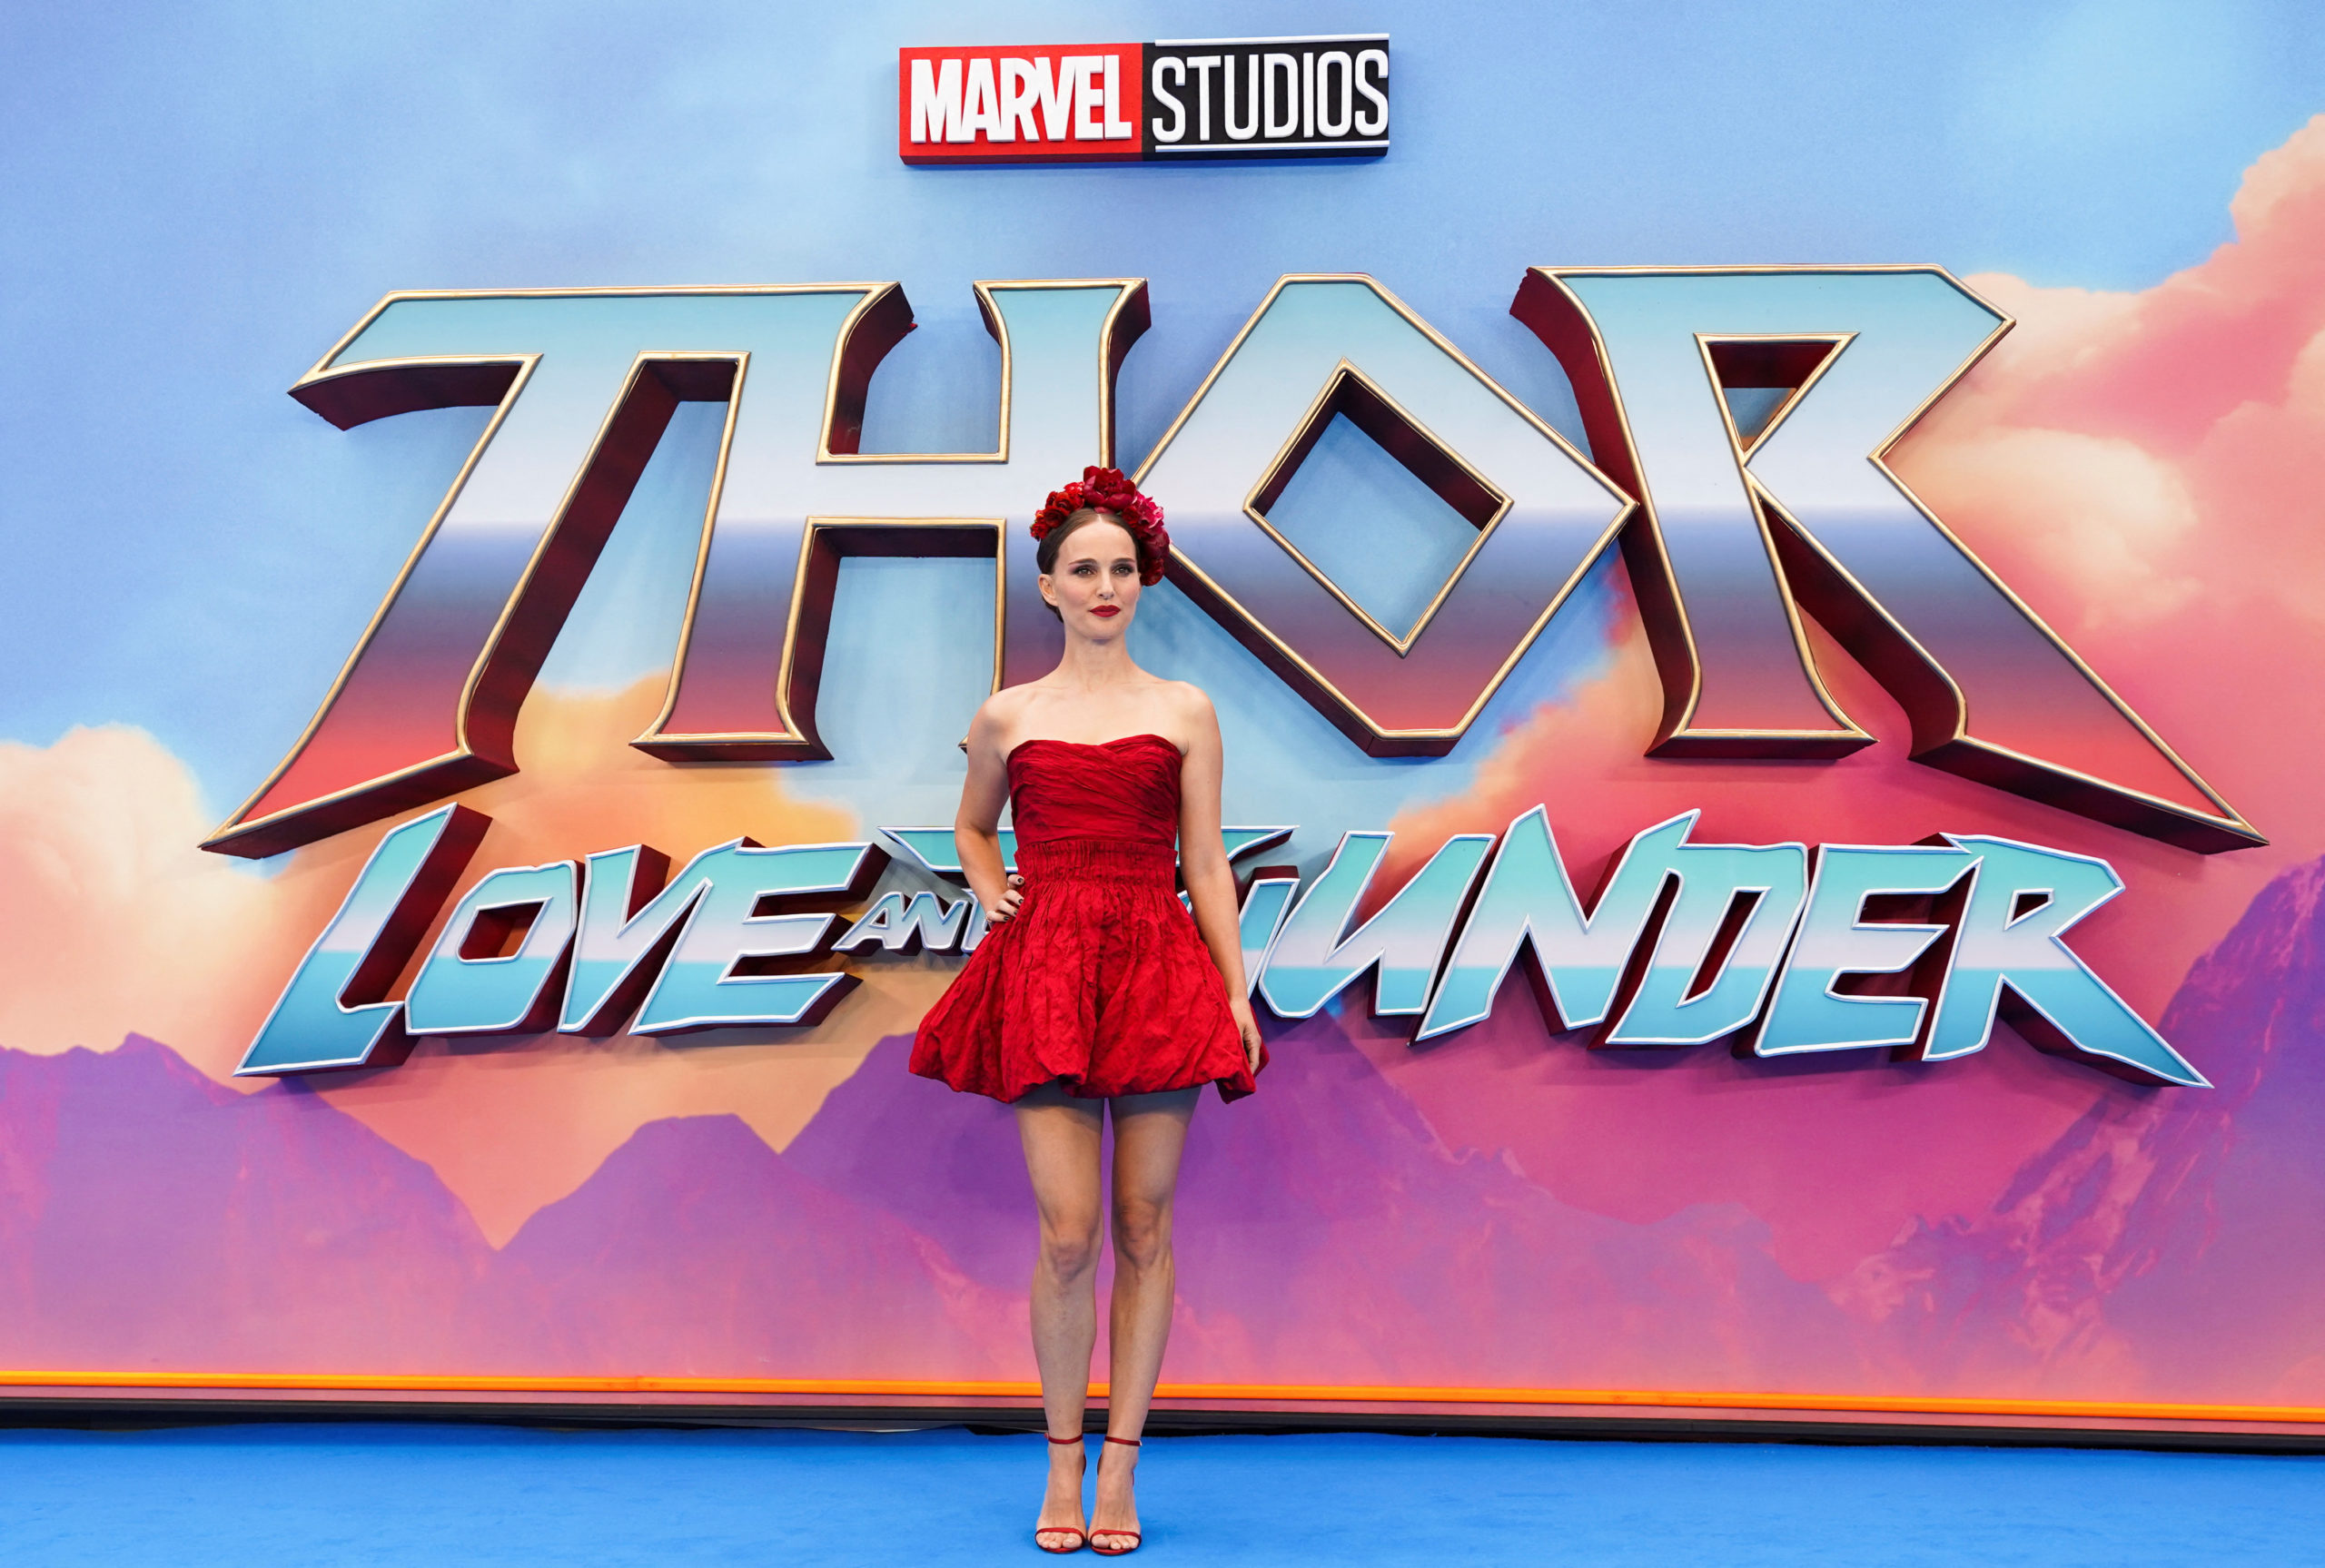 Cast member Natalie Portman attends a premiere of Marvel Studios' "Thor: Love and Thunder" in London, Britain July 5, 2022. REUTERS/Maja Smiejkowska